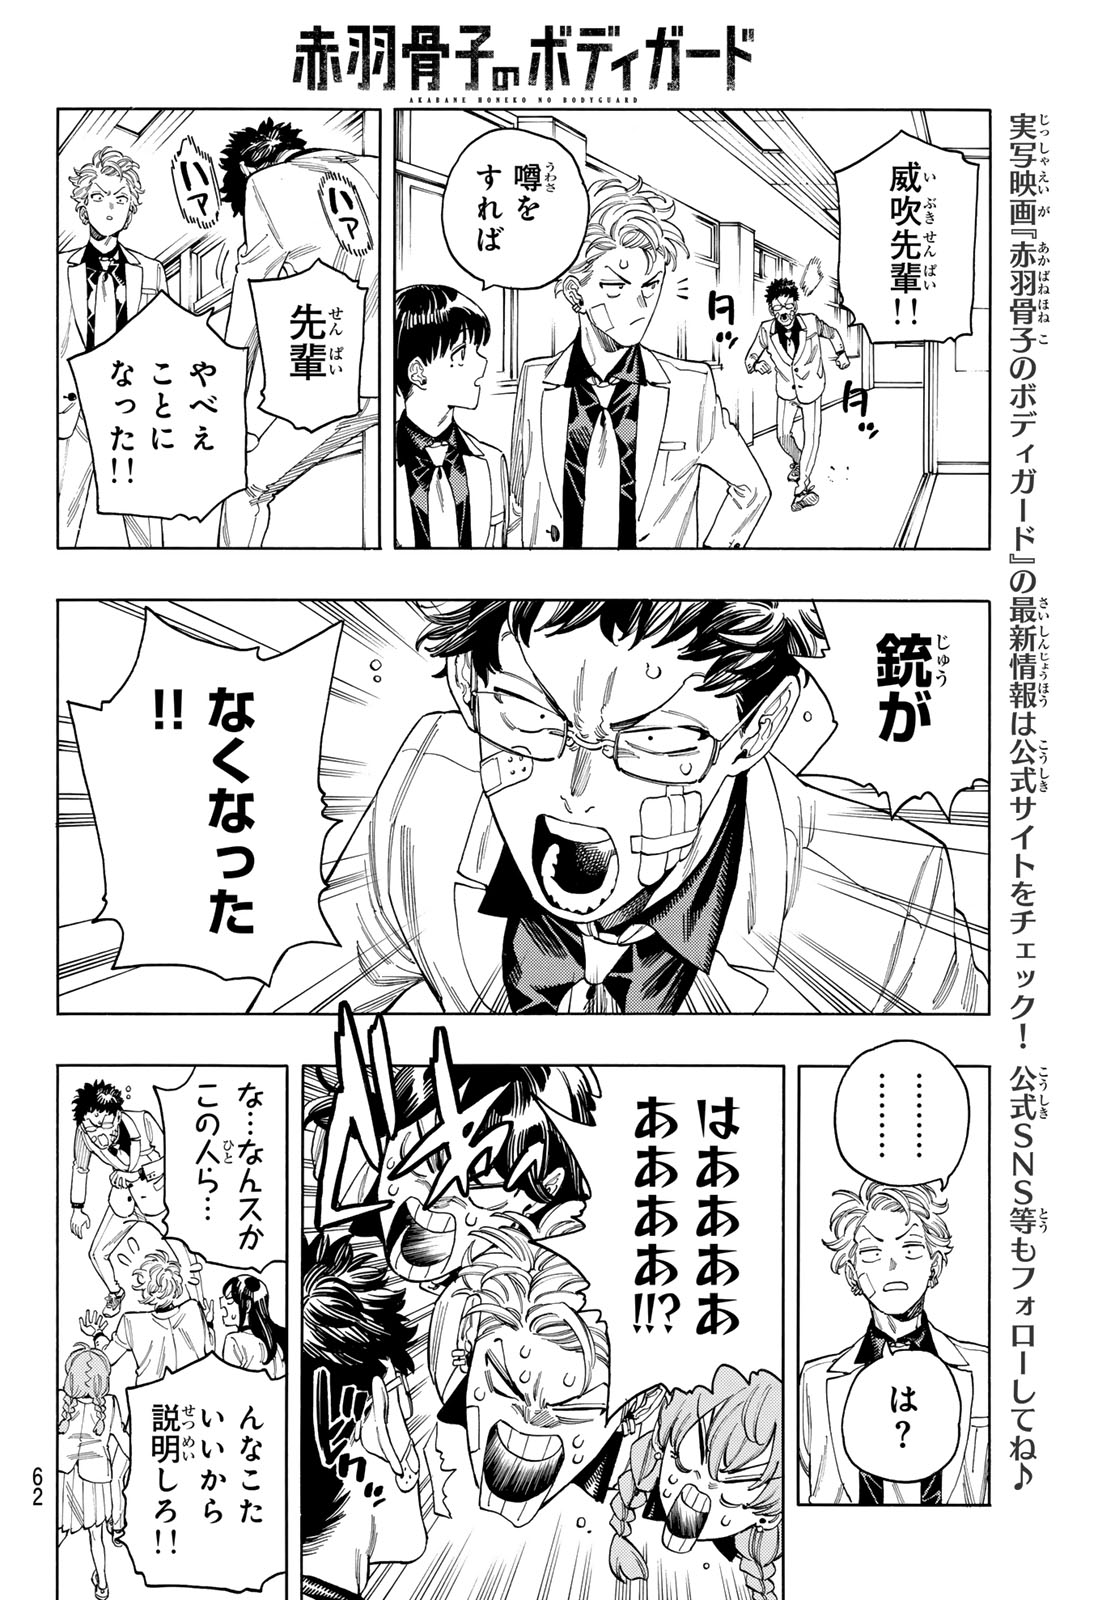 Akabane Honeko no Bodyguard - Chapter 79 - Page 16